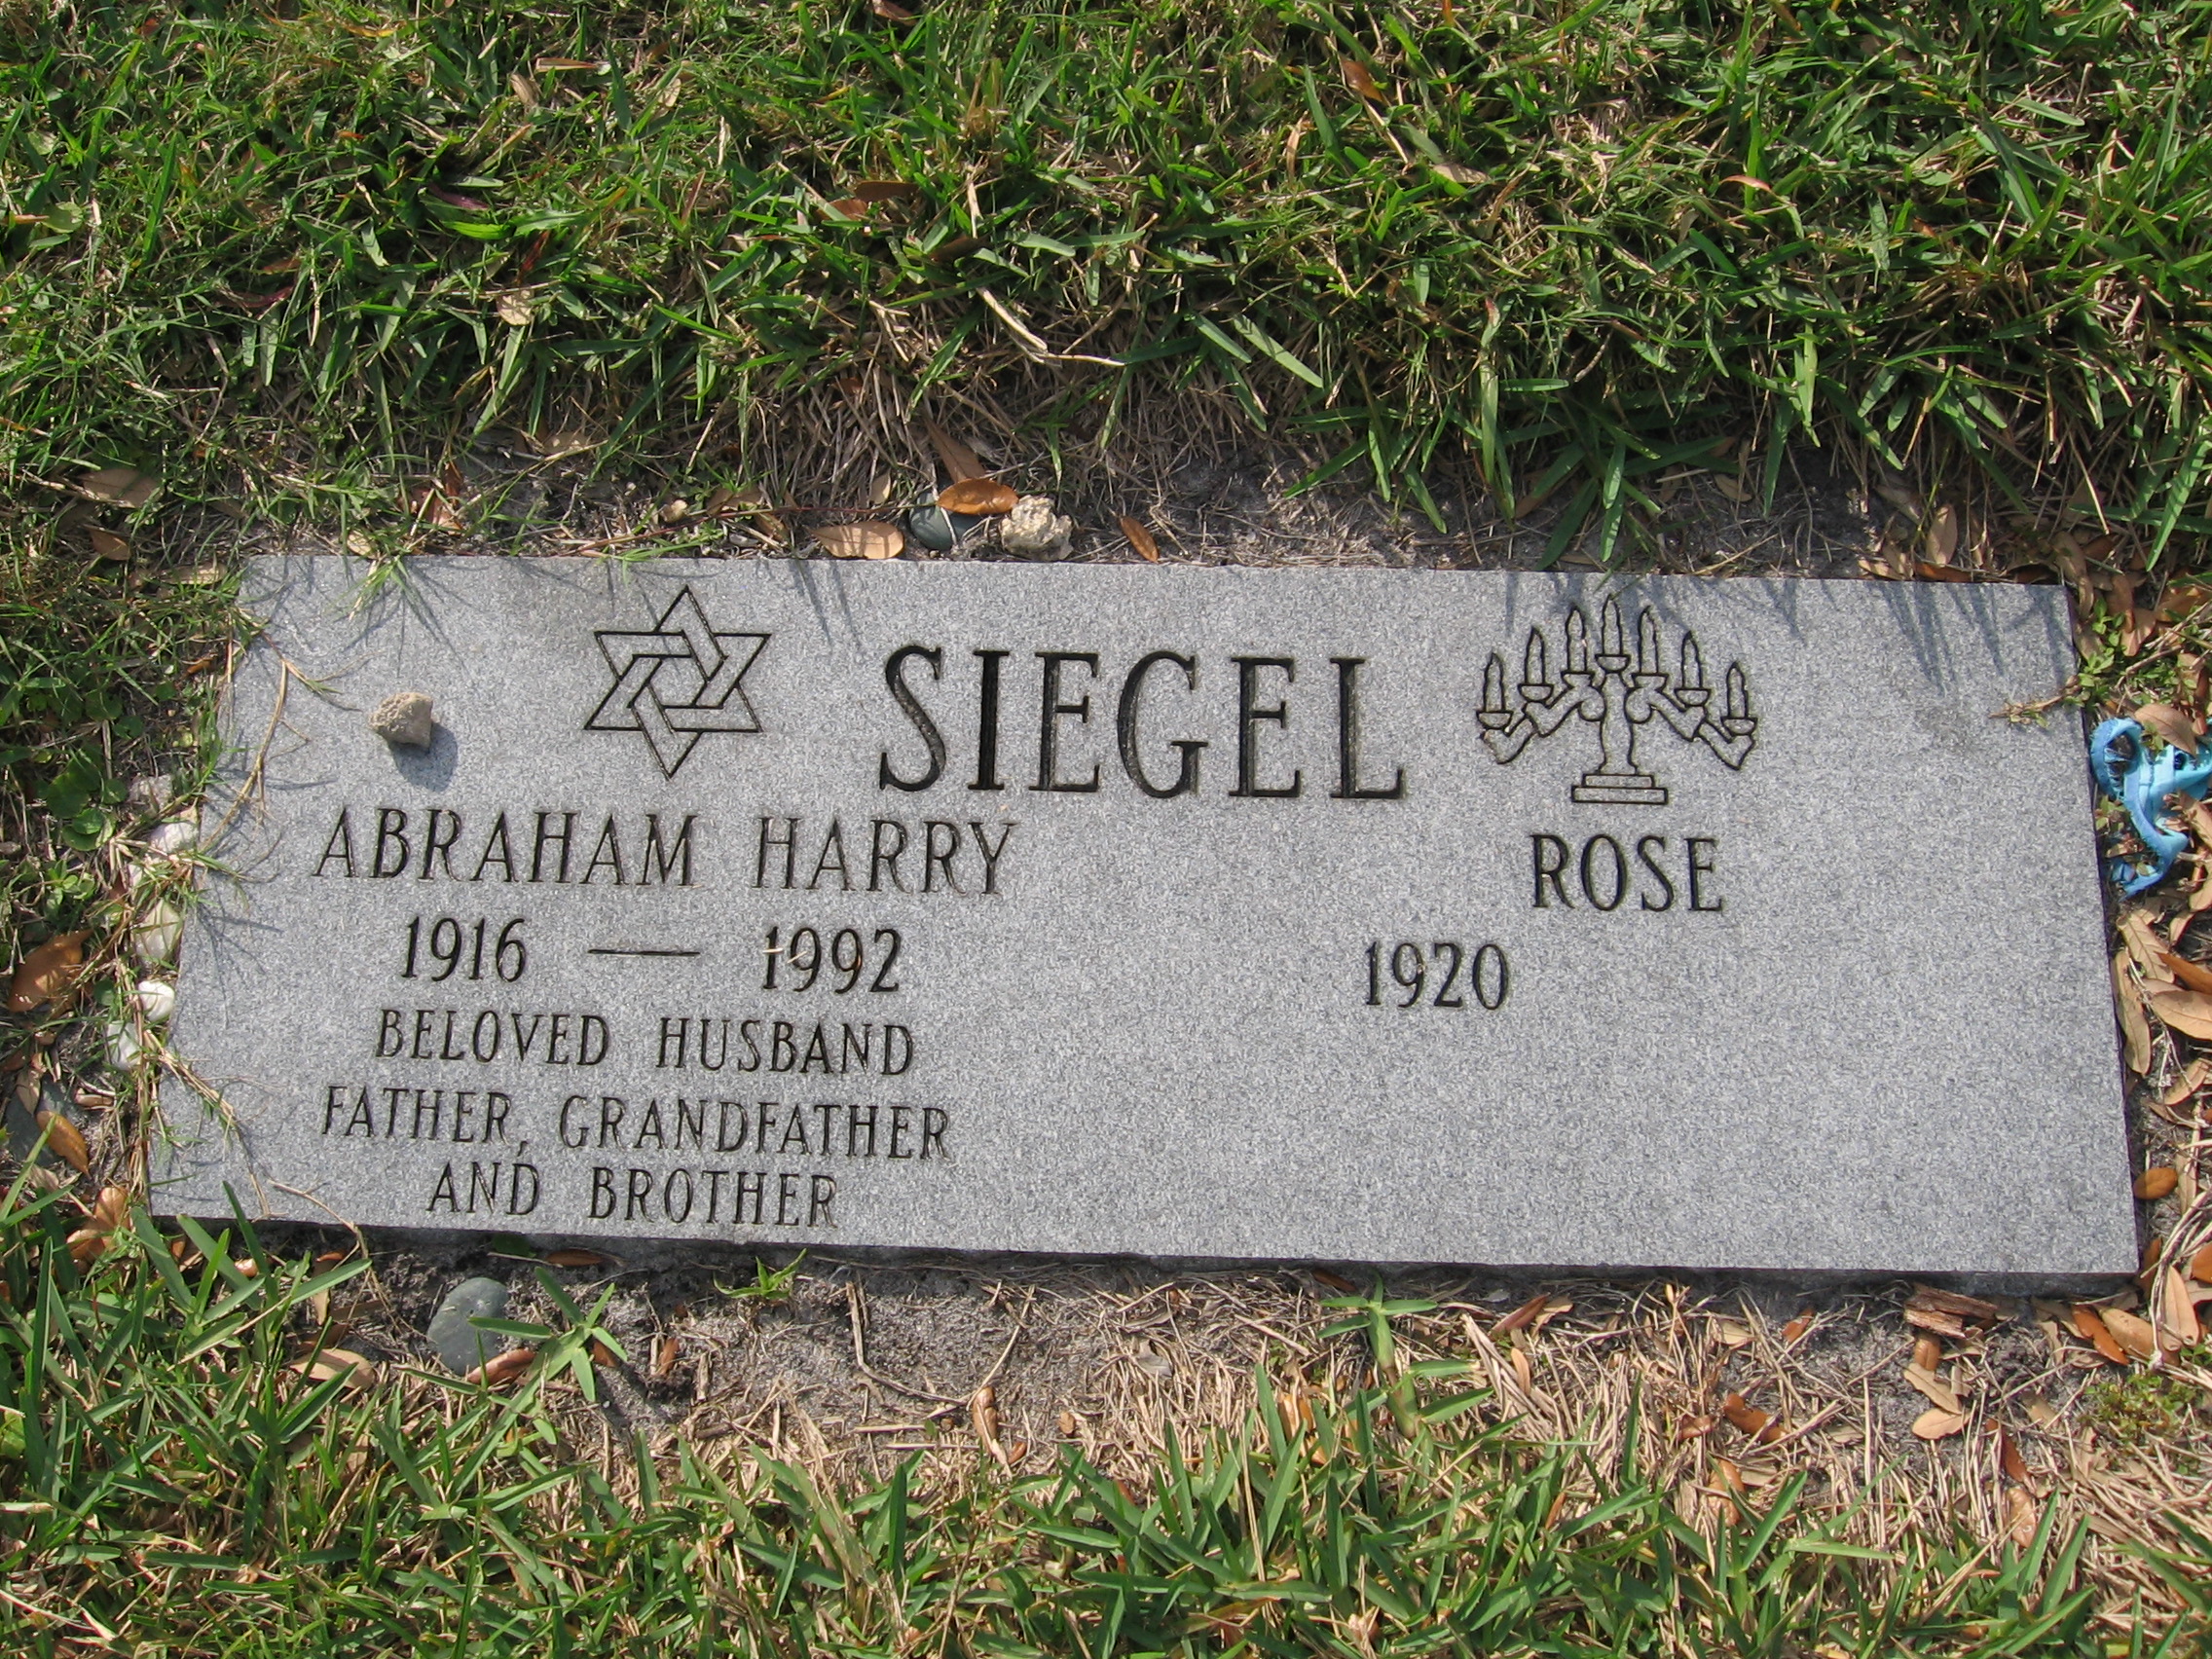 Abraham Harry Siegel